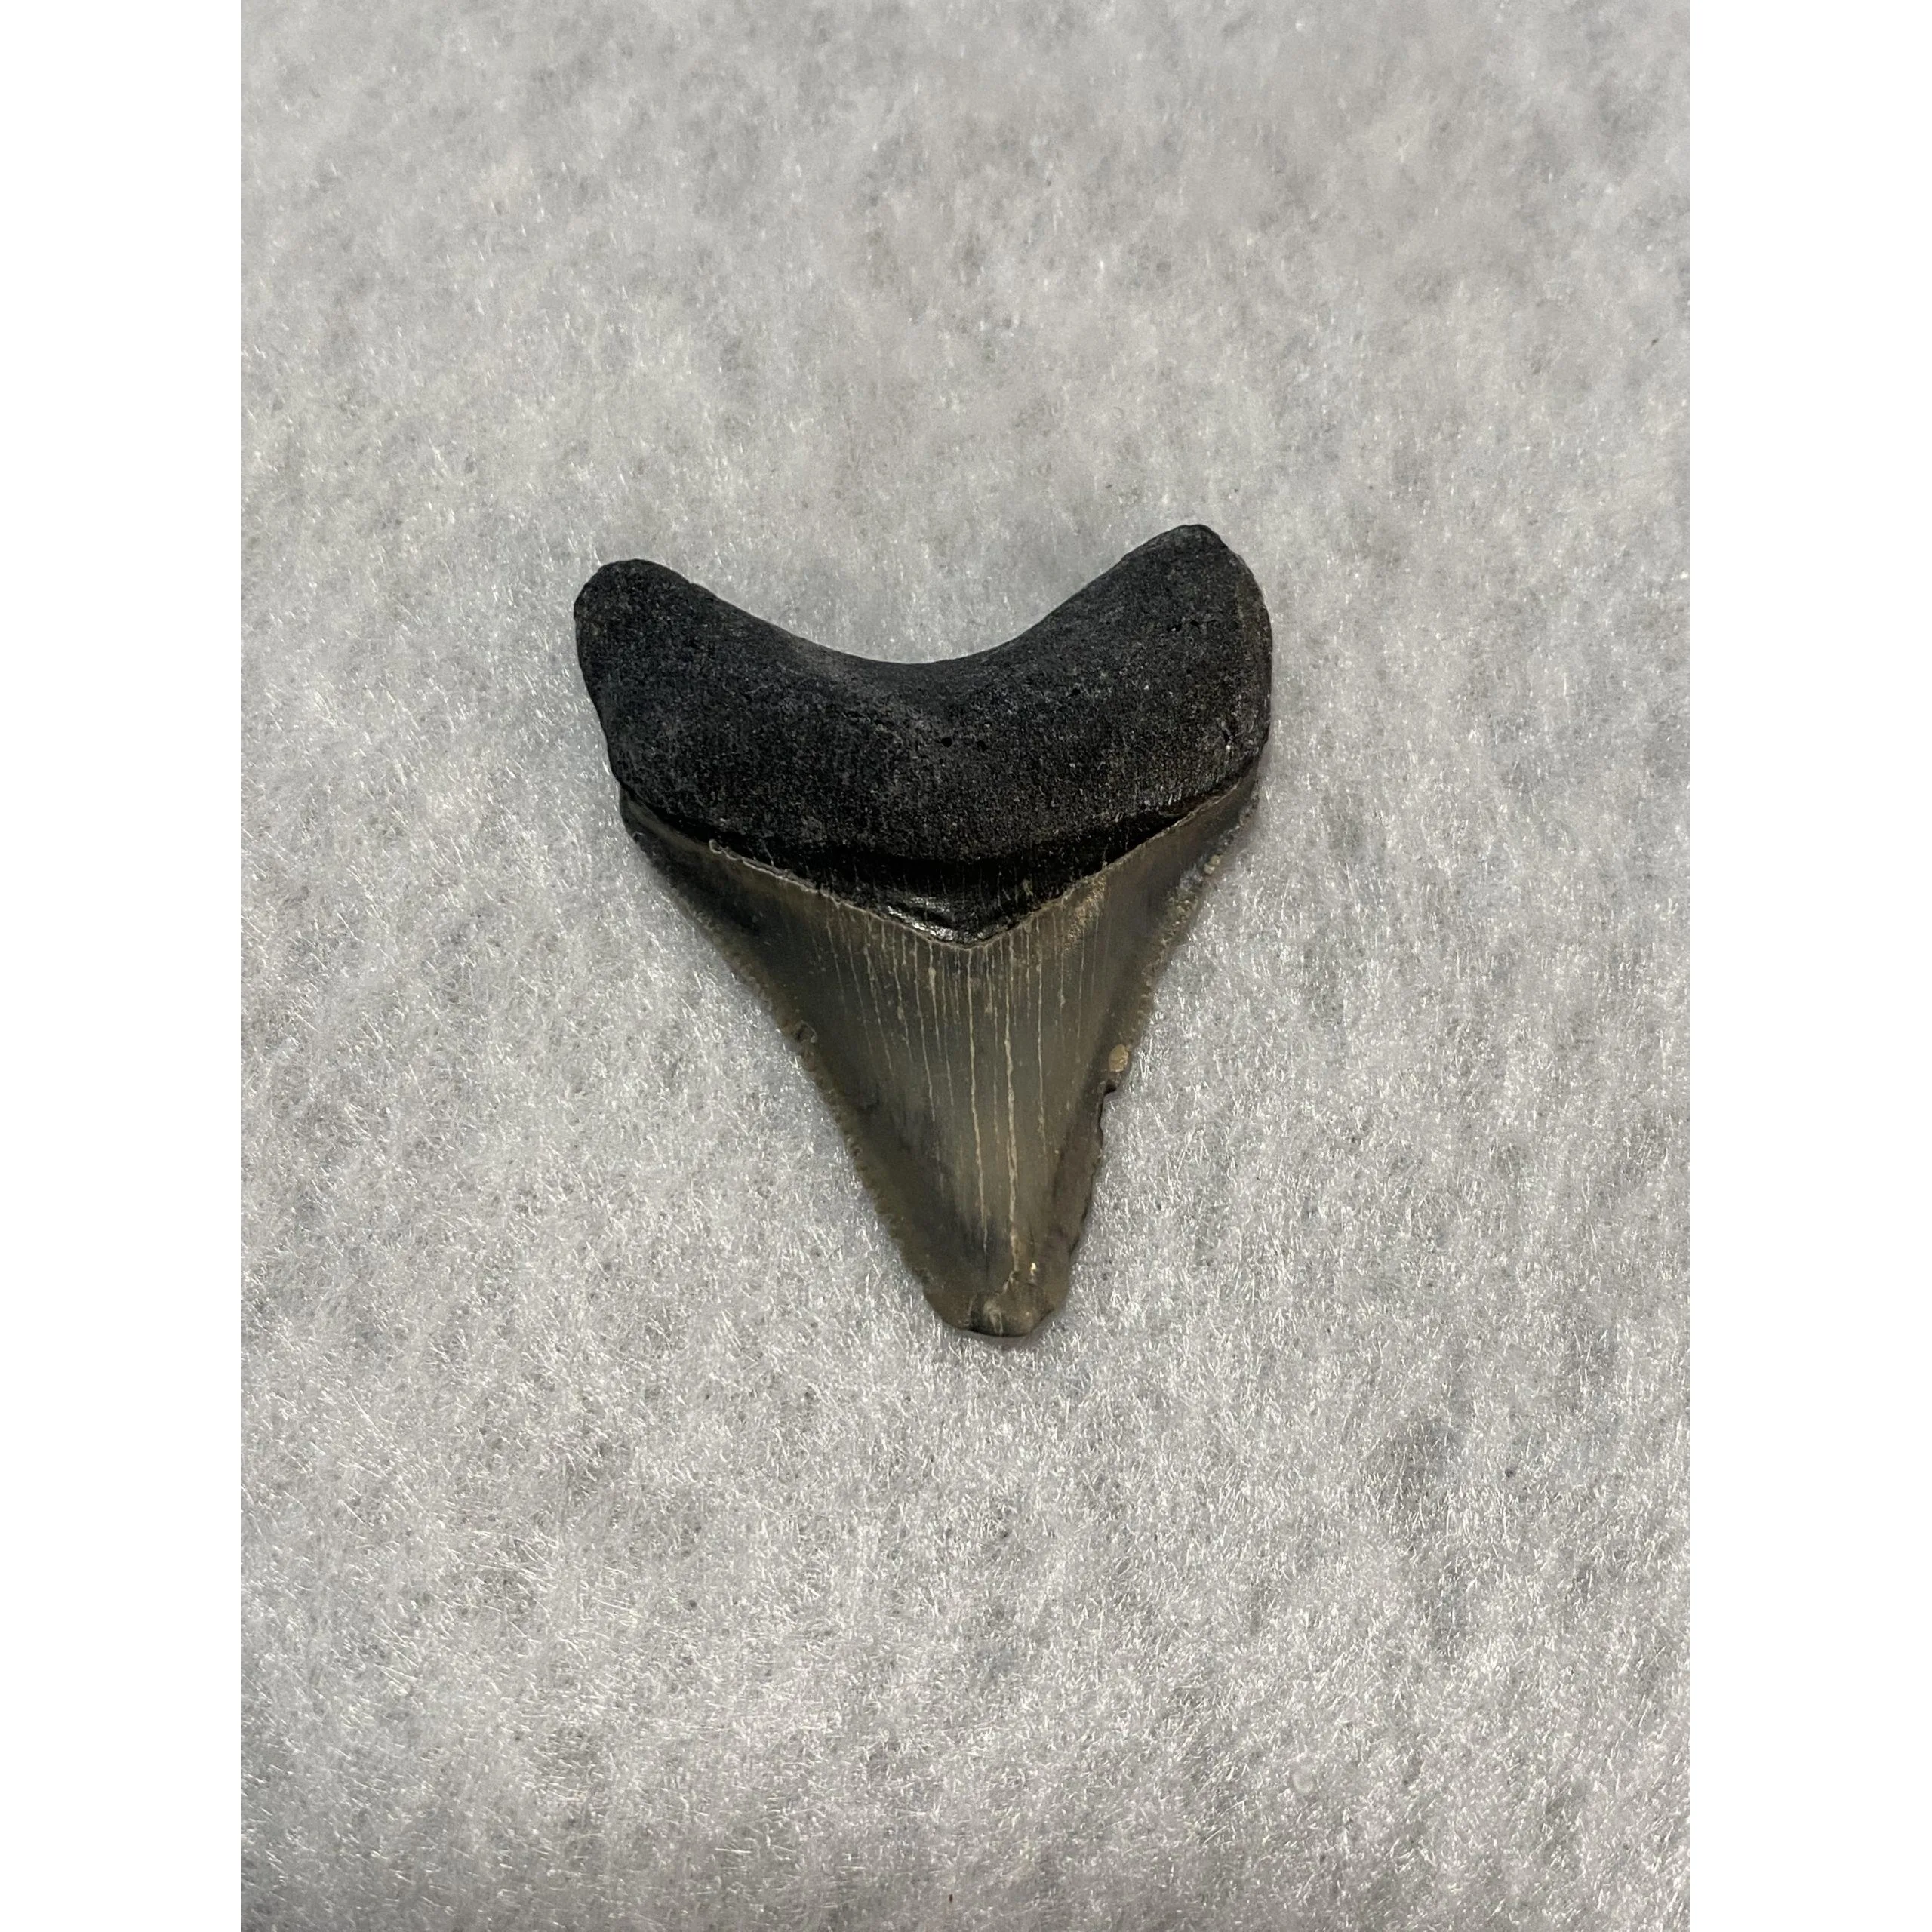 Megalodon Tooth, Bone Valley, Florida, 1.80 inch Prehistoric Online